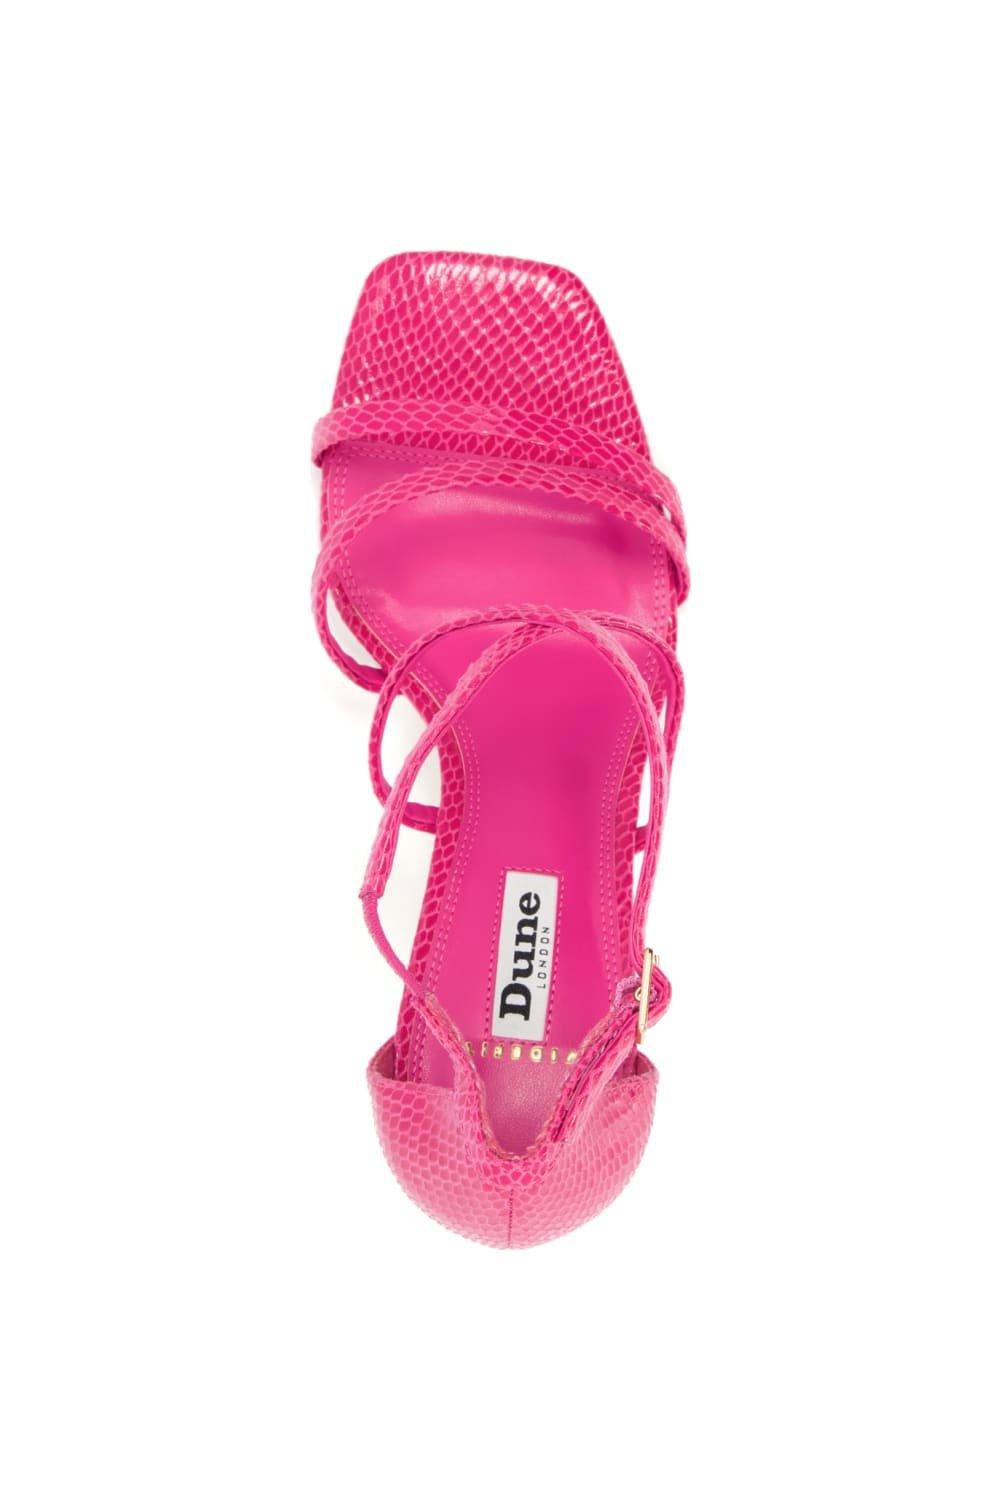 Dorothy Perkins Women's Pumps Closed Toe Heels, Pink Pink 145, 11 :  Amazon.com.au: Clothing, Shoes & Accessories